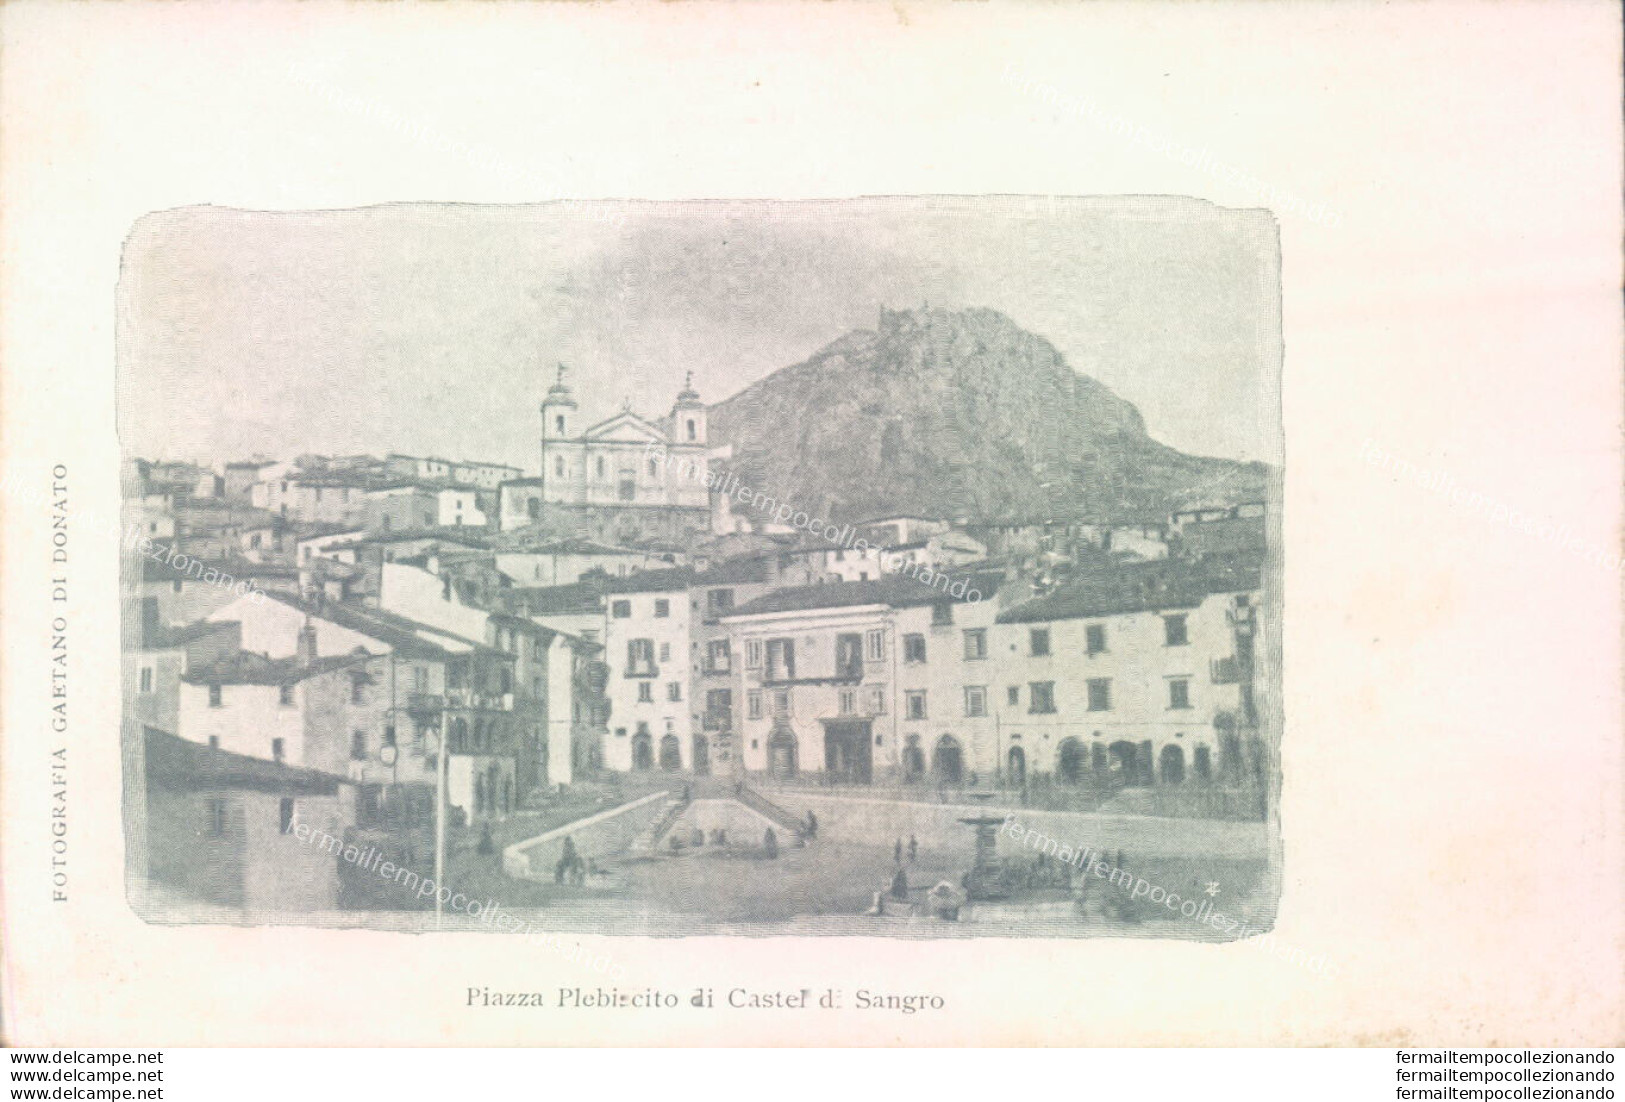 Ae301 Cartolina Piazza Plebiscito Di Castel Di Sangro Provincia Di L'aquila - L'Aquila